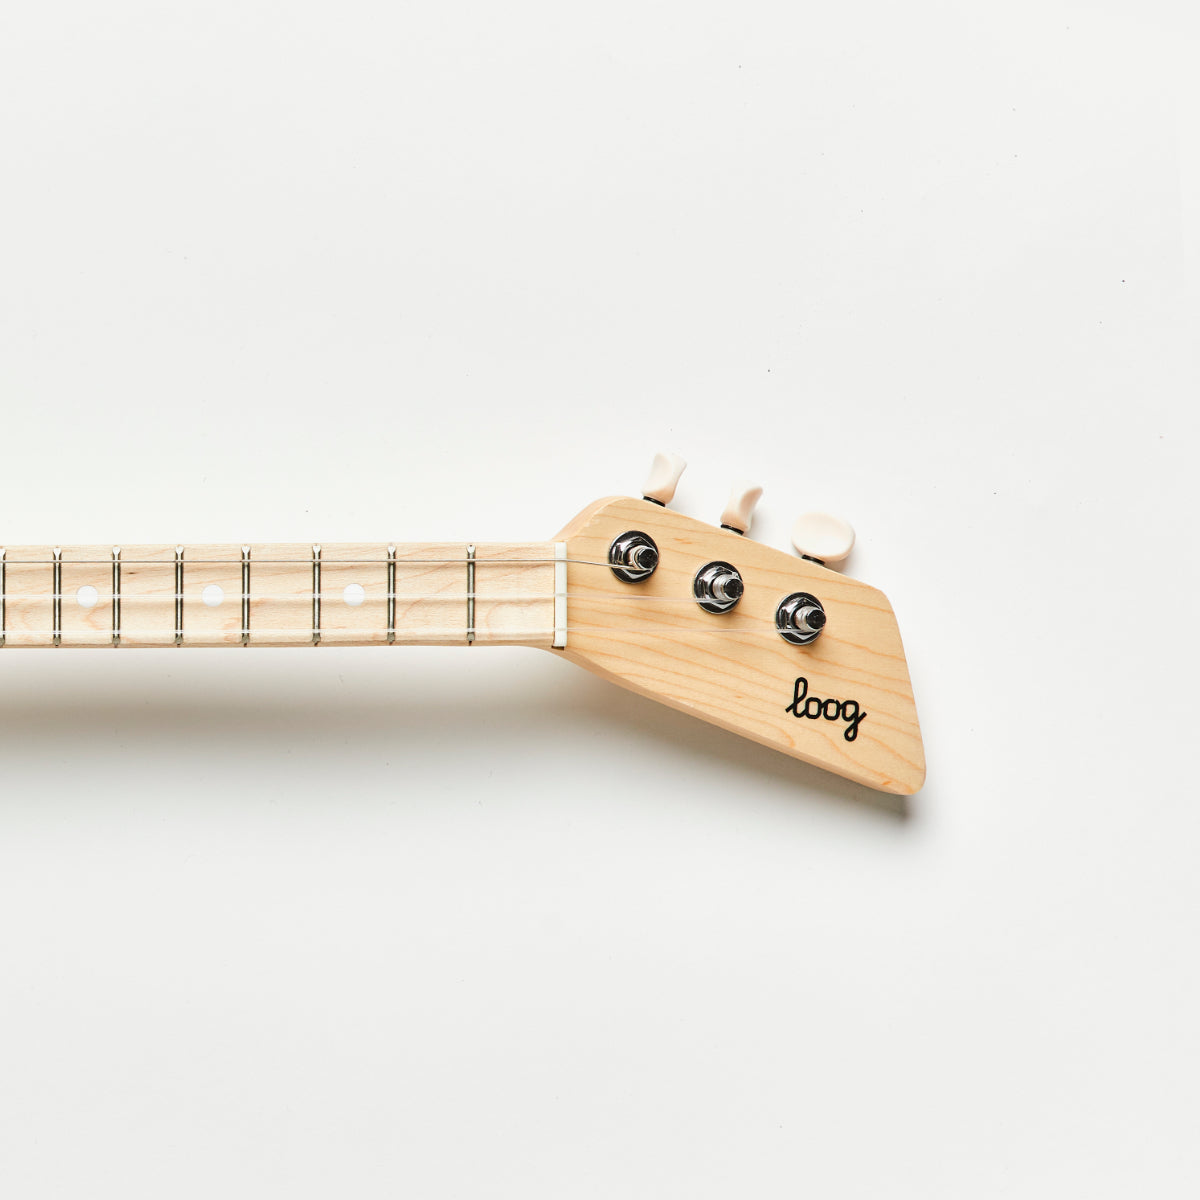 Loog Mini Guitar